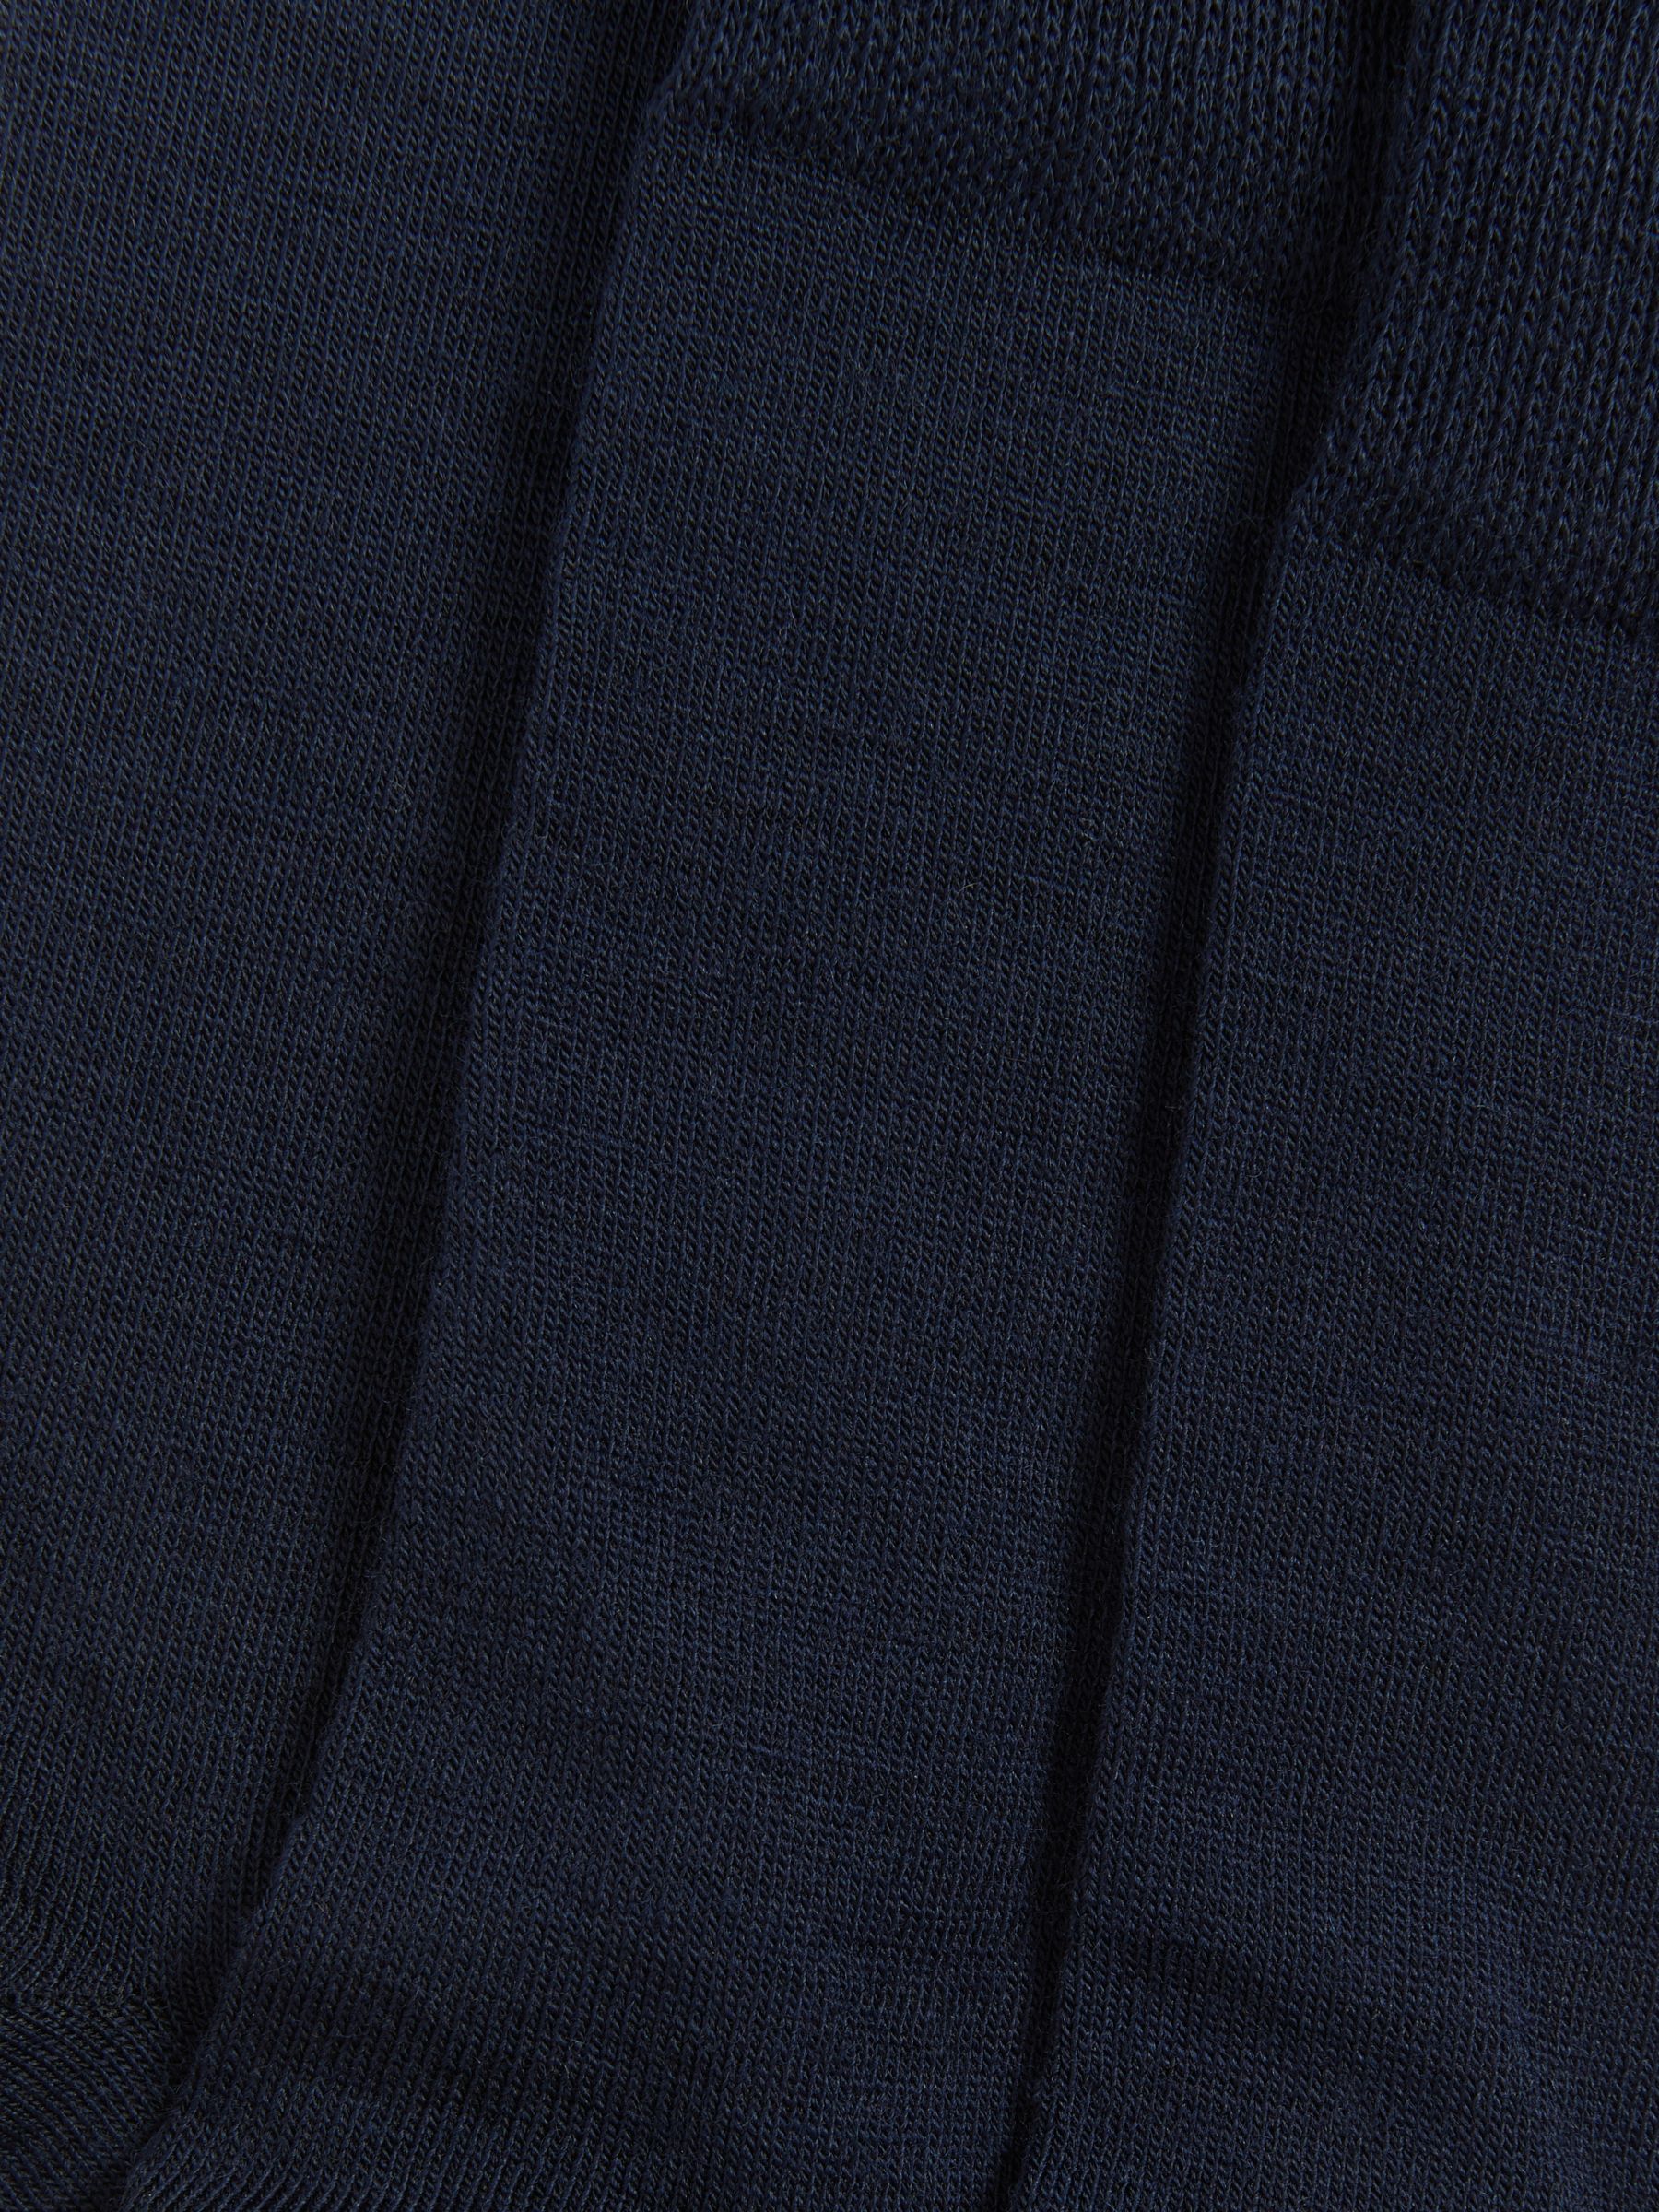 Buy John Lewis Wool Mix Men's Socks, Pack of 3 Online at johnlewis.com